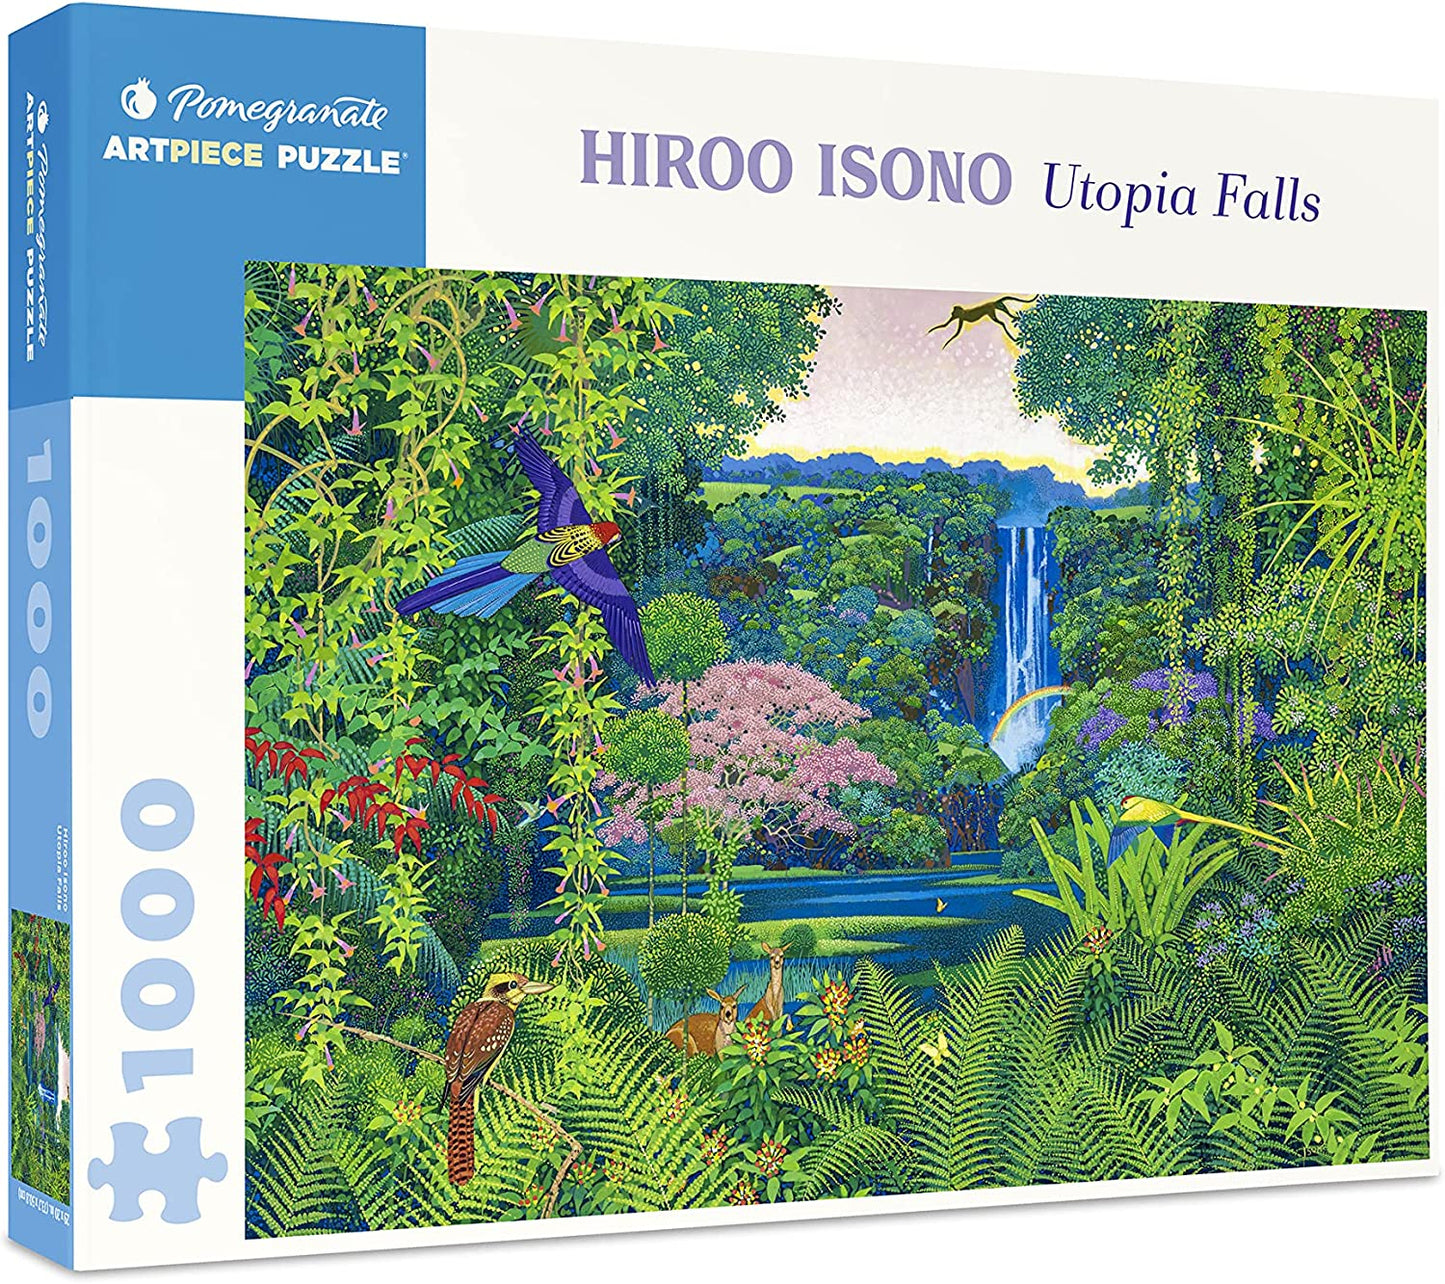 Puzzle: Hiroo Isono - Utopia Falls 1000 Pieces